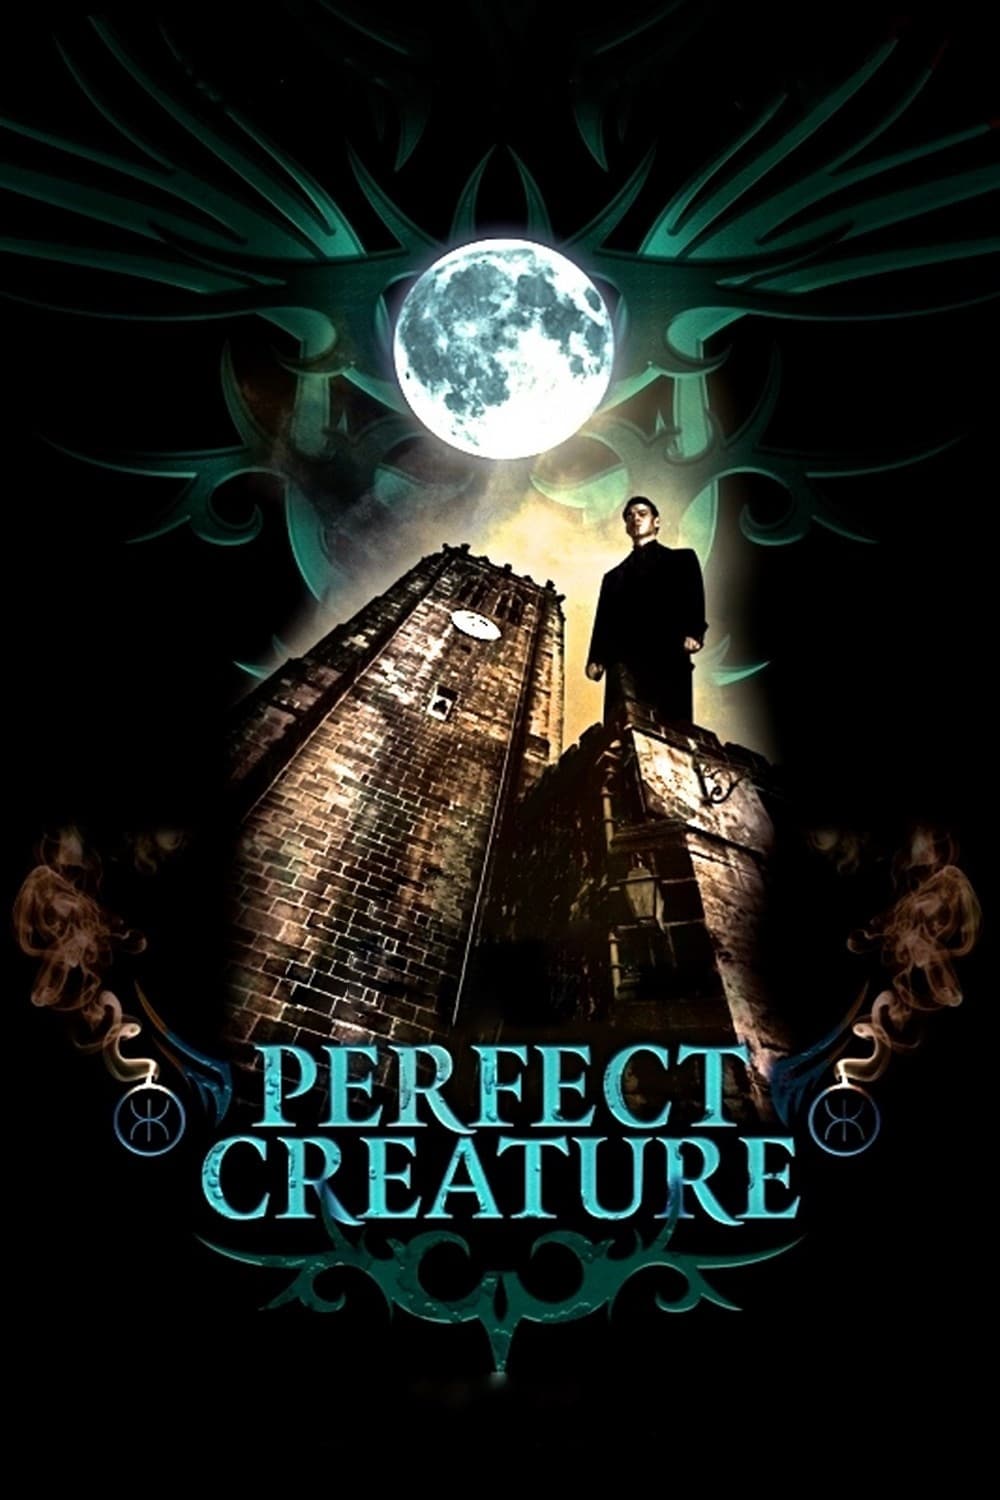 Perfect Creature [HD] (2006)